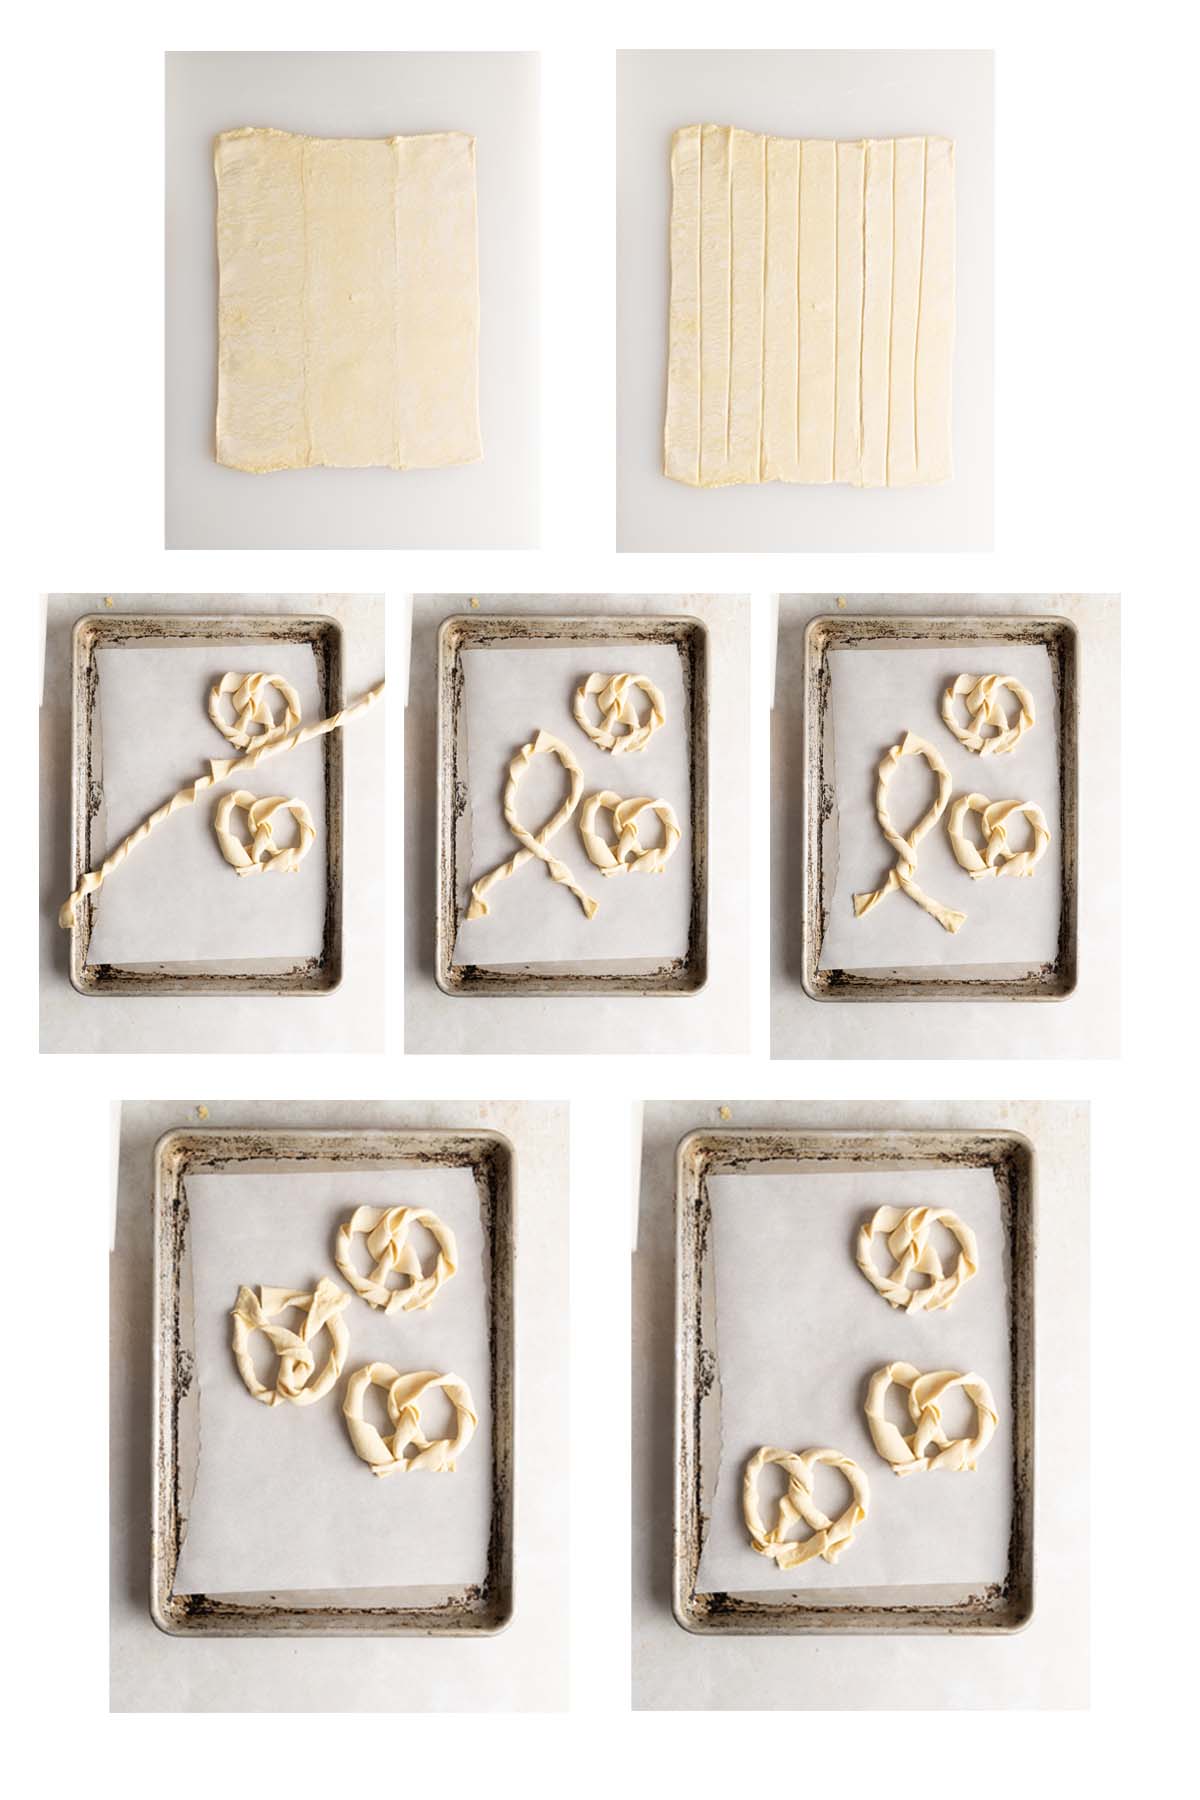 7 Process images on how to shape puddingbrezel. 